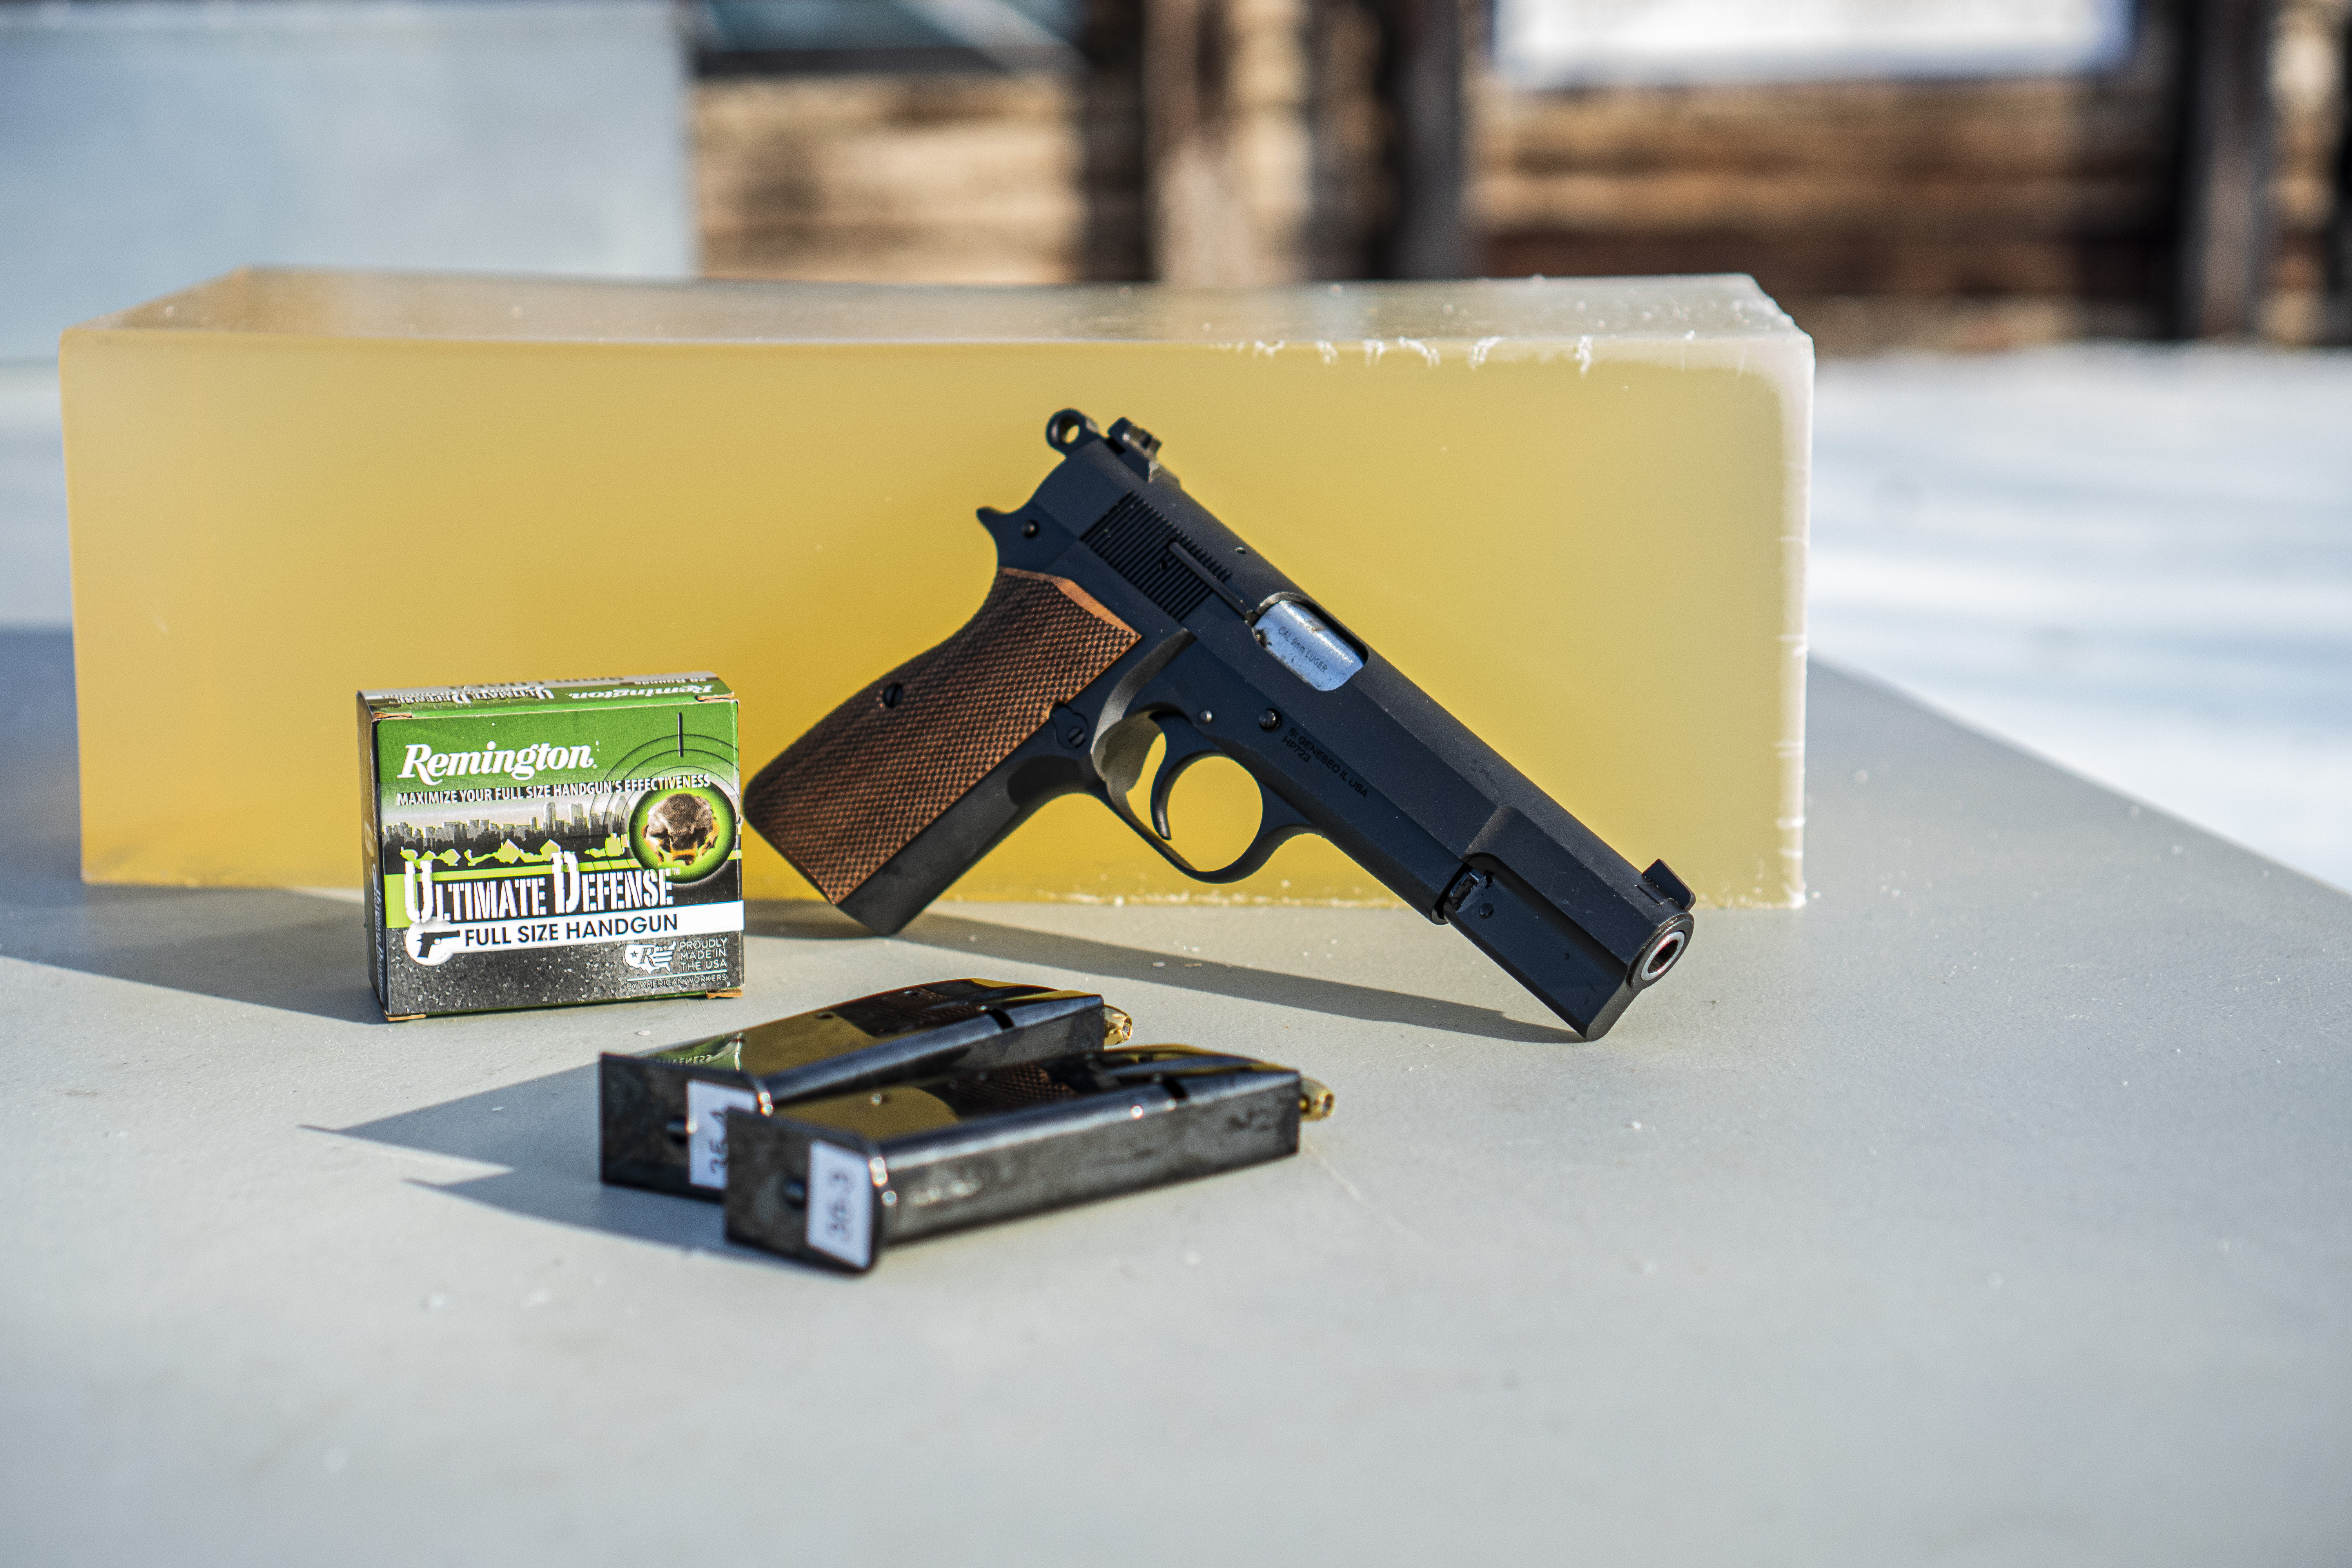 SA 35 and Remington ammo with a gel block